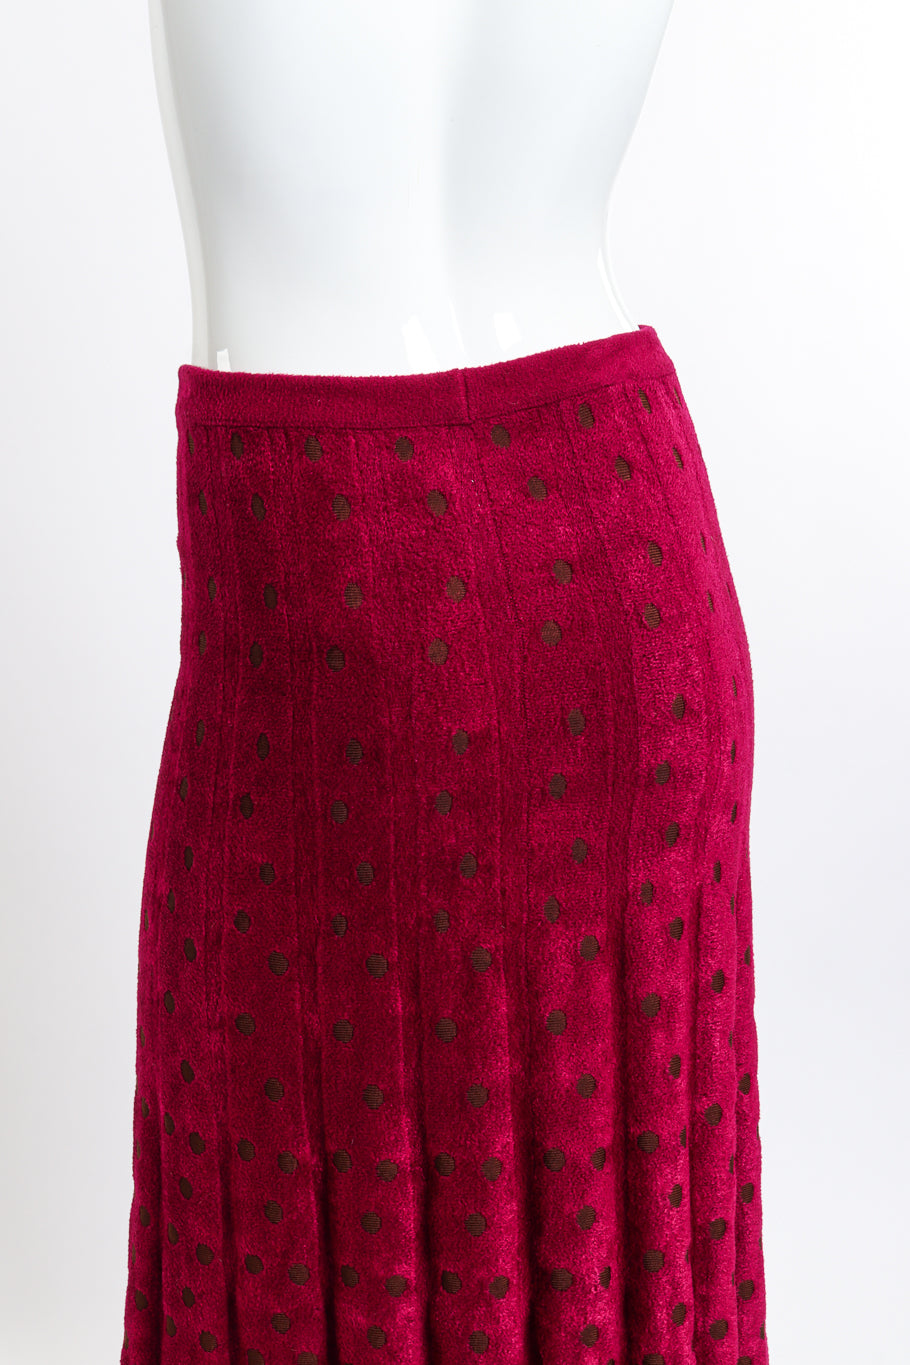 Alaïa Long Polka Dot Skirt back on mannequin closeup @recessla